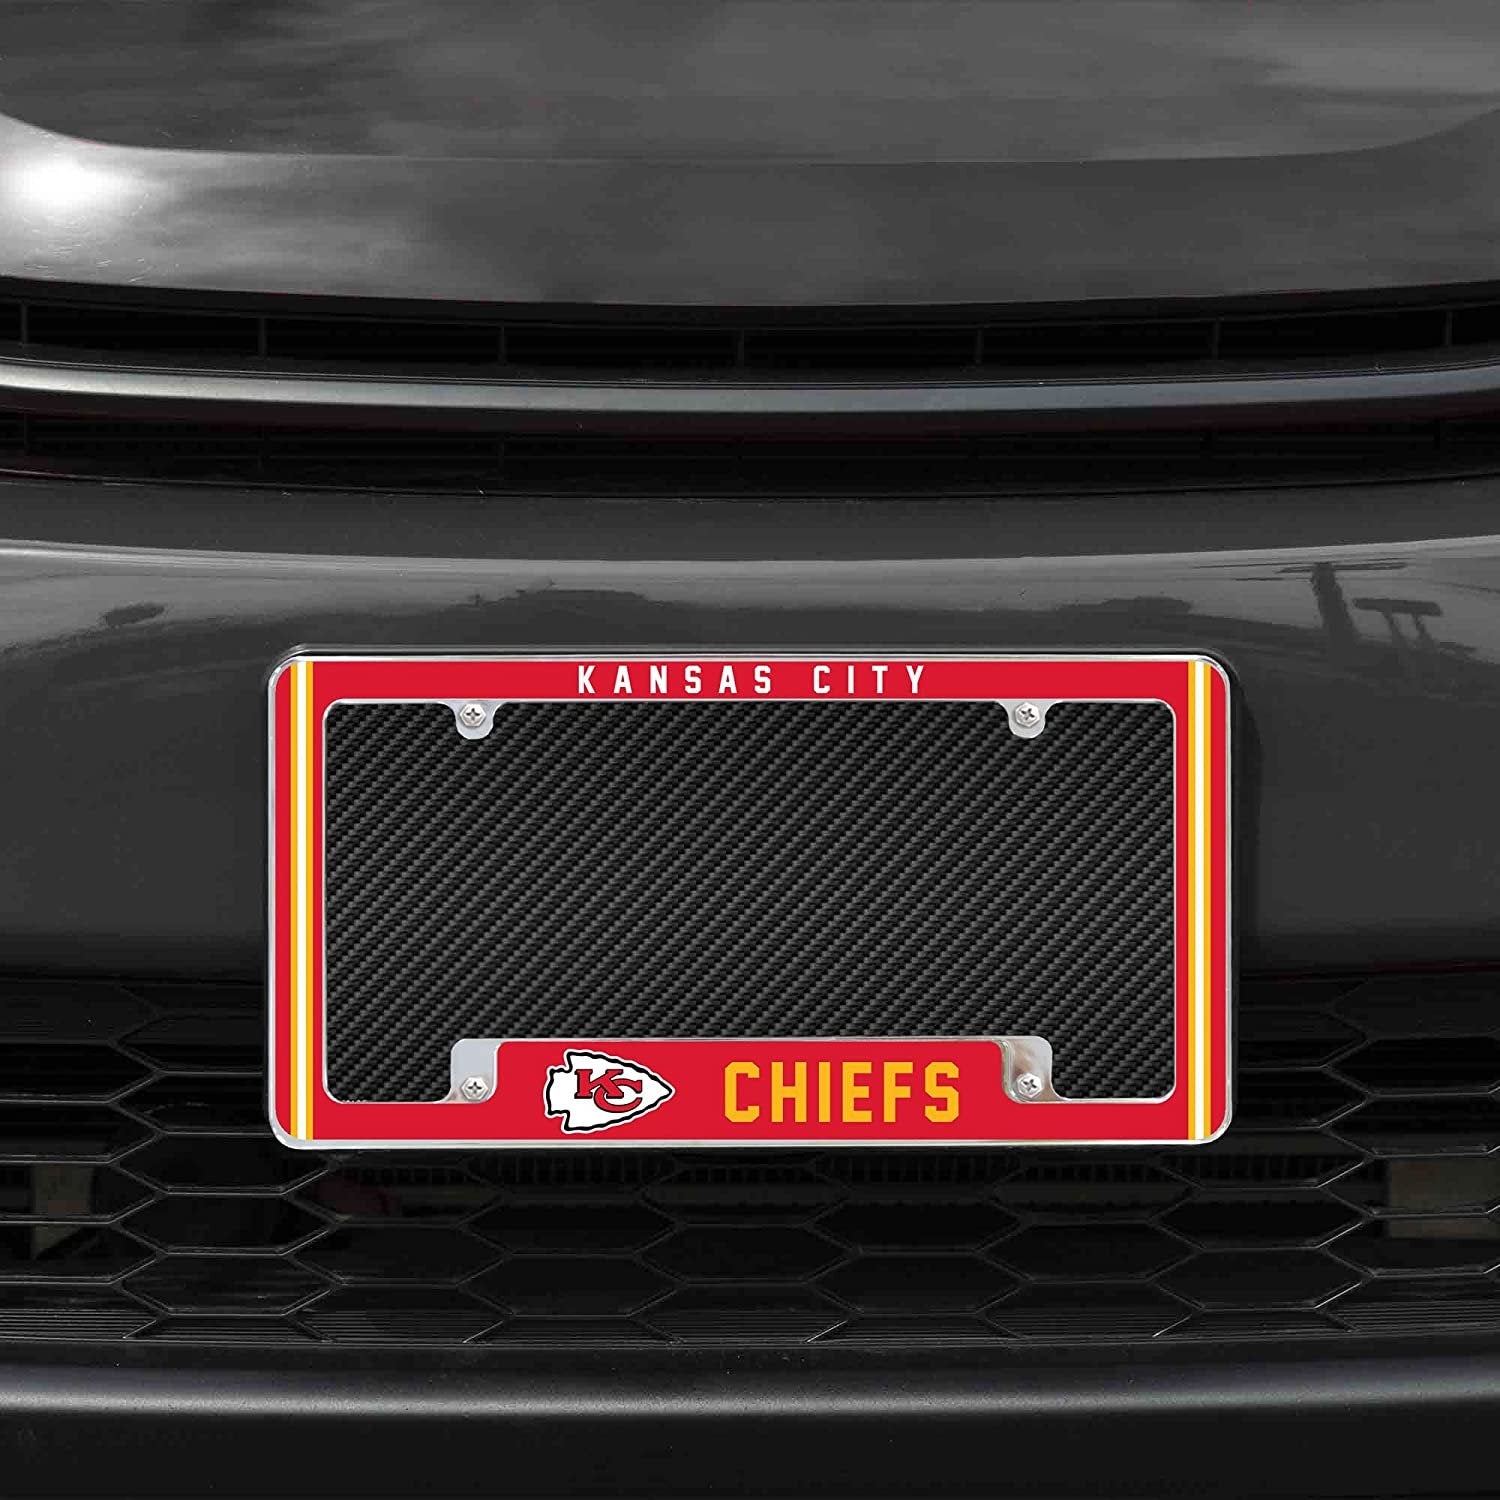 Kansas City Chiefs Metal License Plate Frame Chrome Tag Cover Alternate Design 6x12 Inch